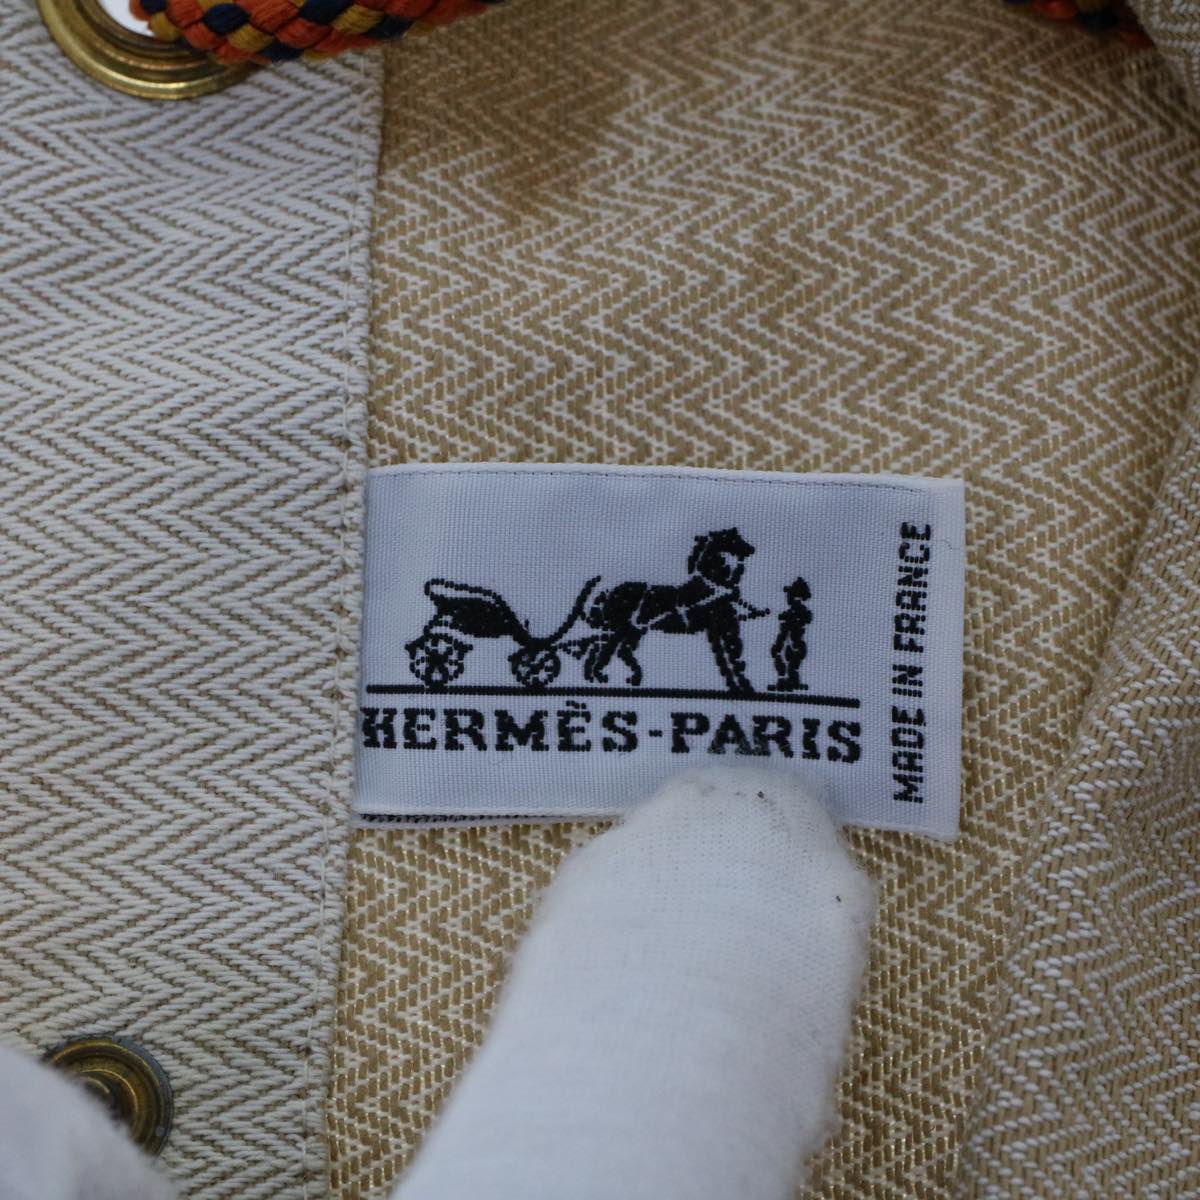 HERMES Aline PM Shoulder Bag Canvas Beige Auth bs6298